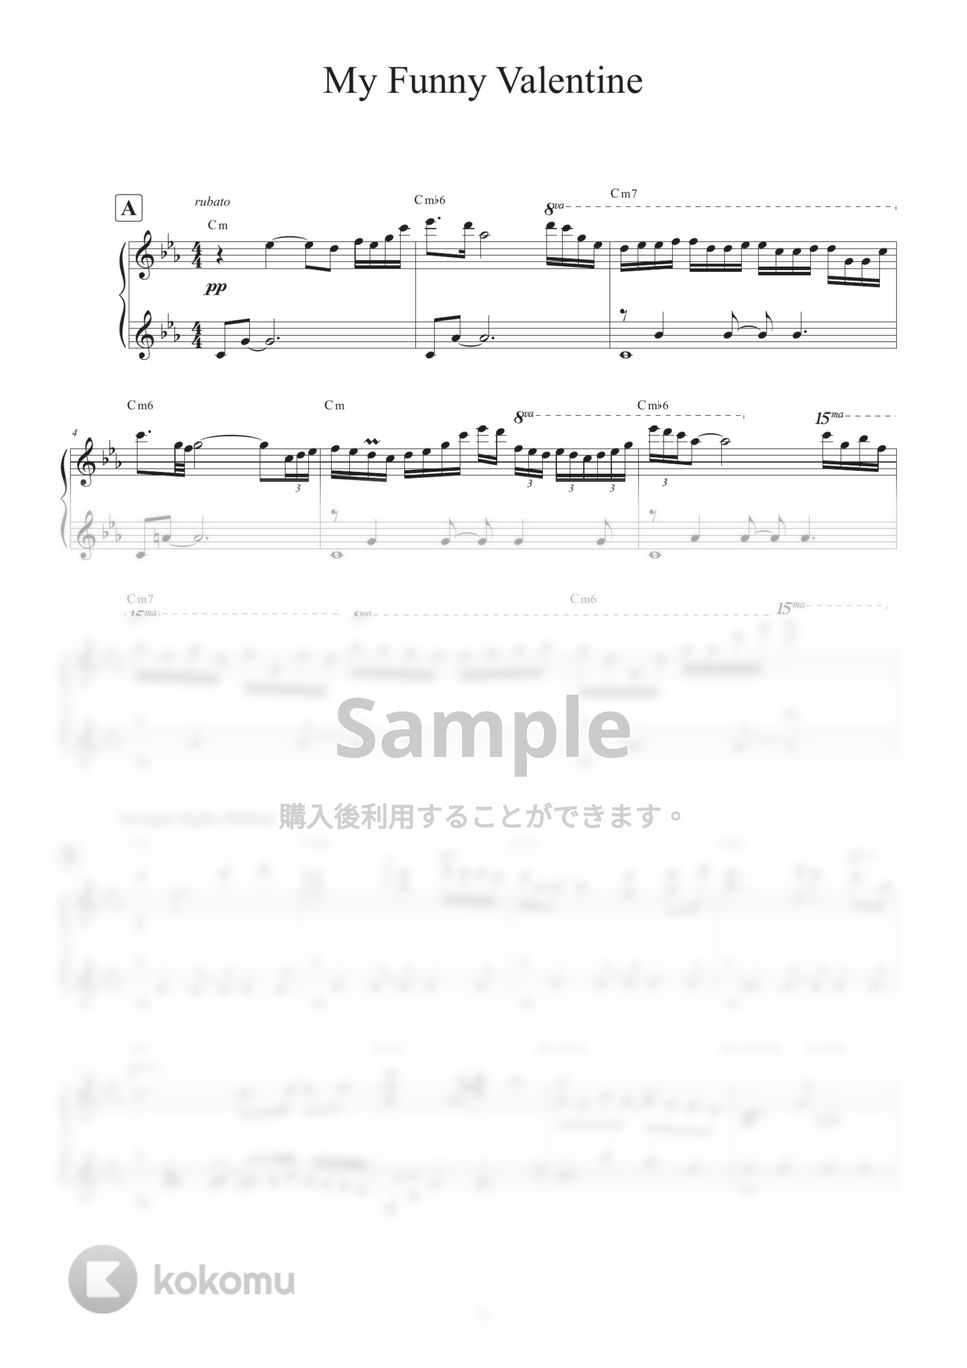 Richard Rogers - My Funny Valentine (上級ジャズピアノアレンジ) by Jacob Koller